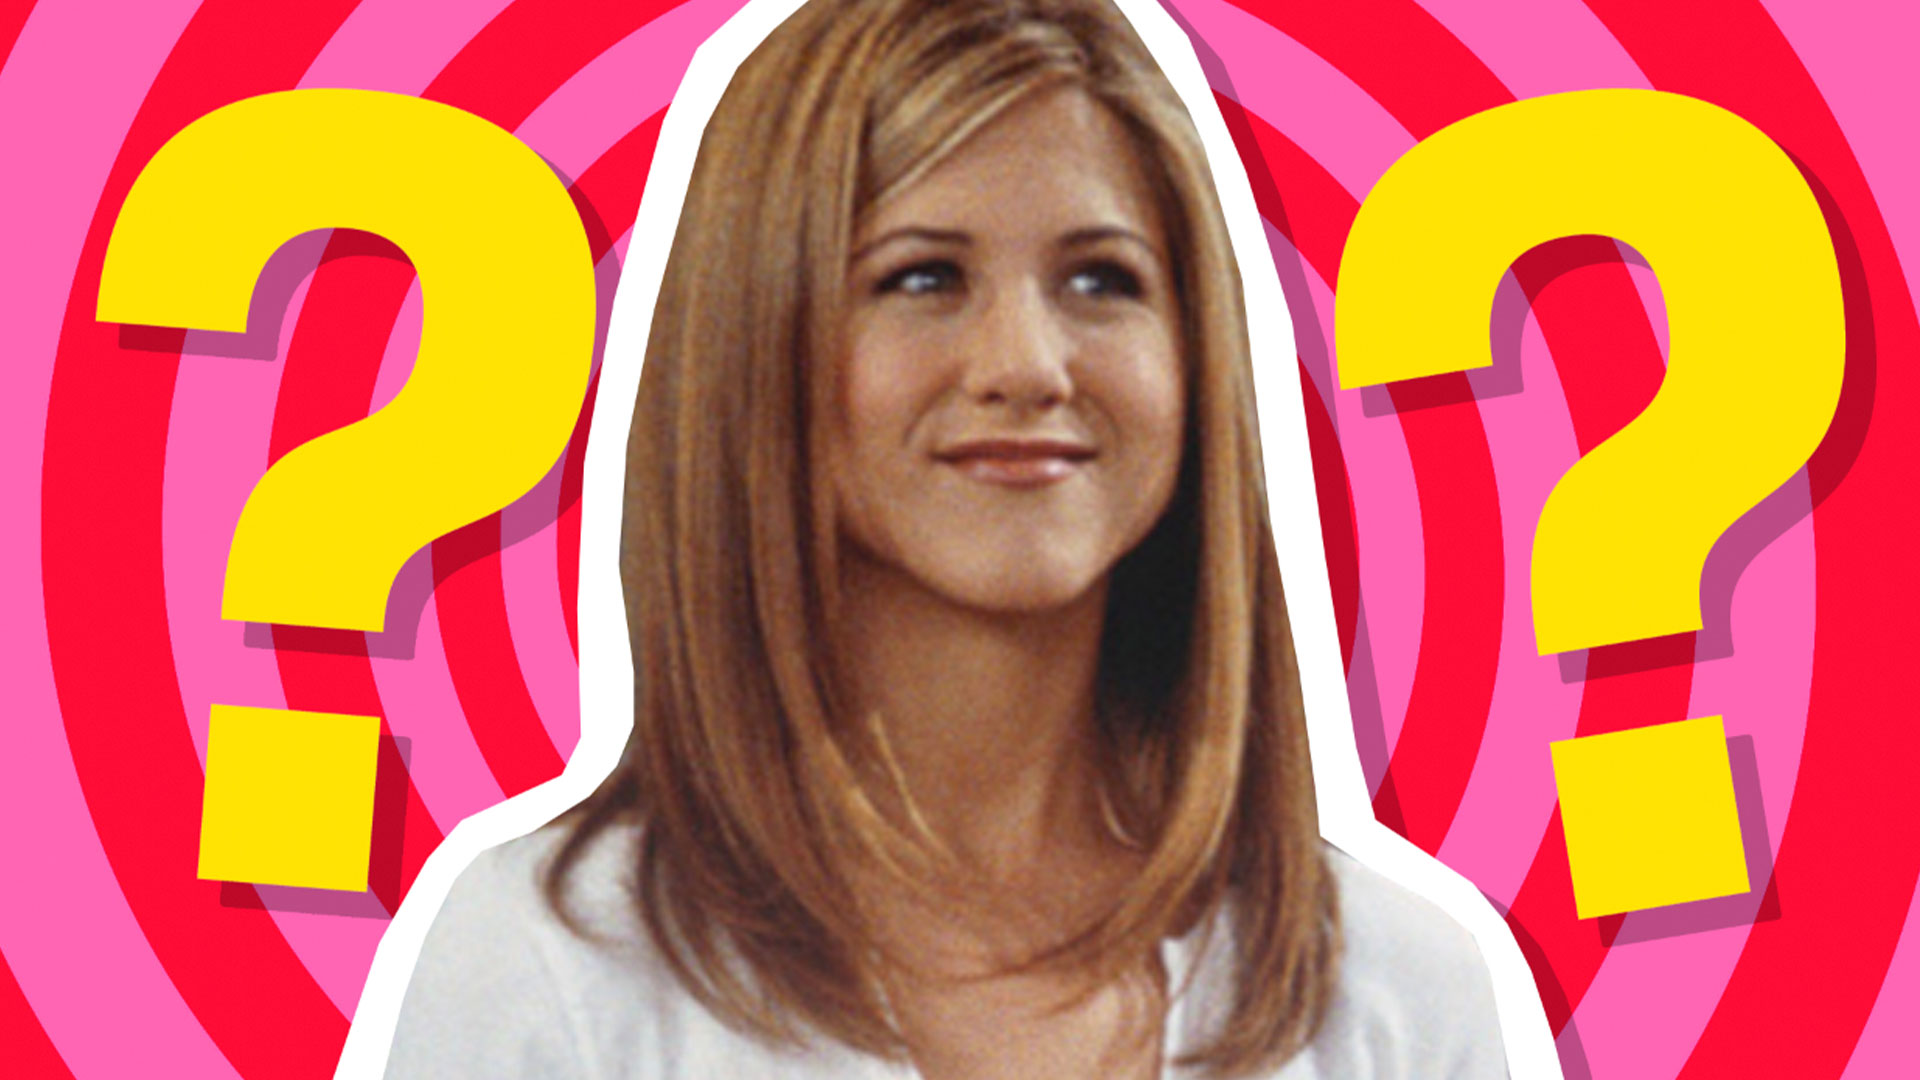 Friends Quiz: Can You Match Rachel's Hair To The Correct Season?